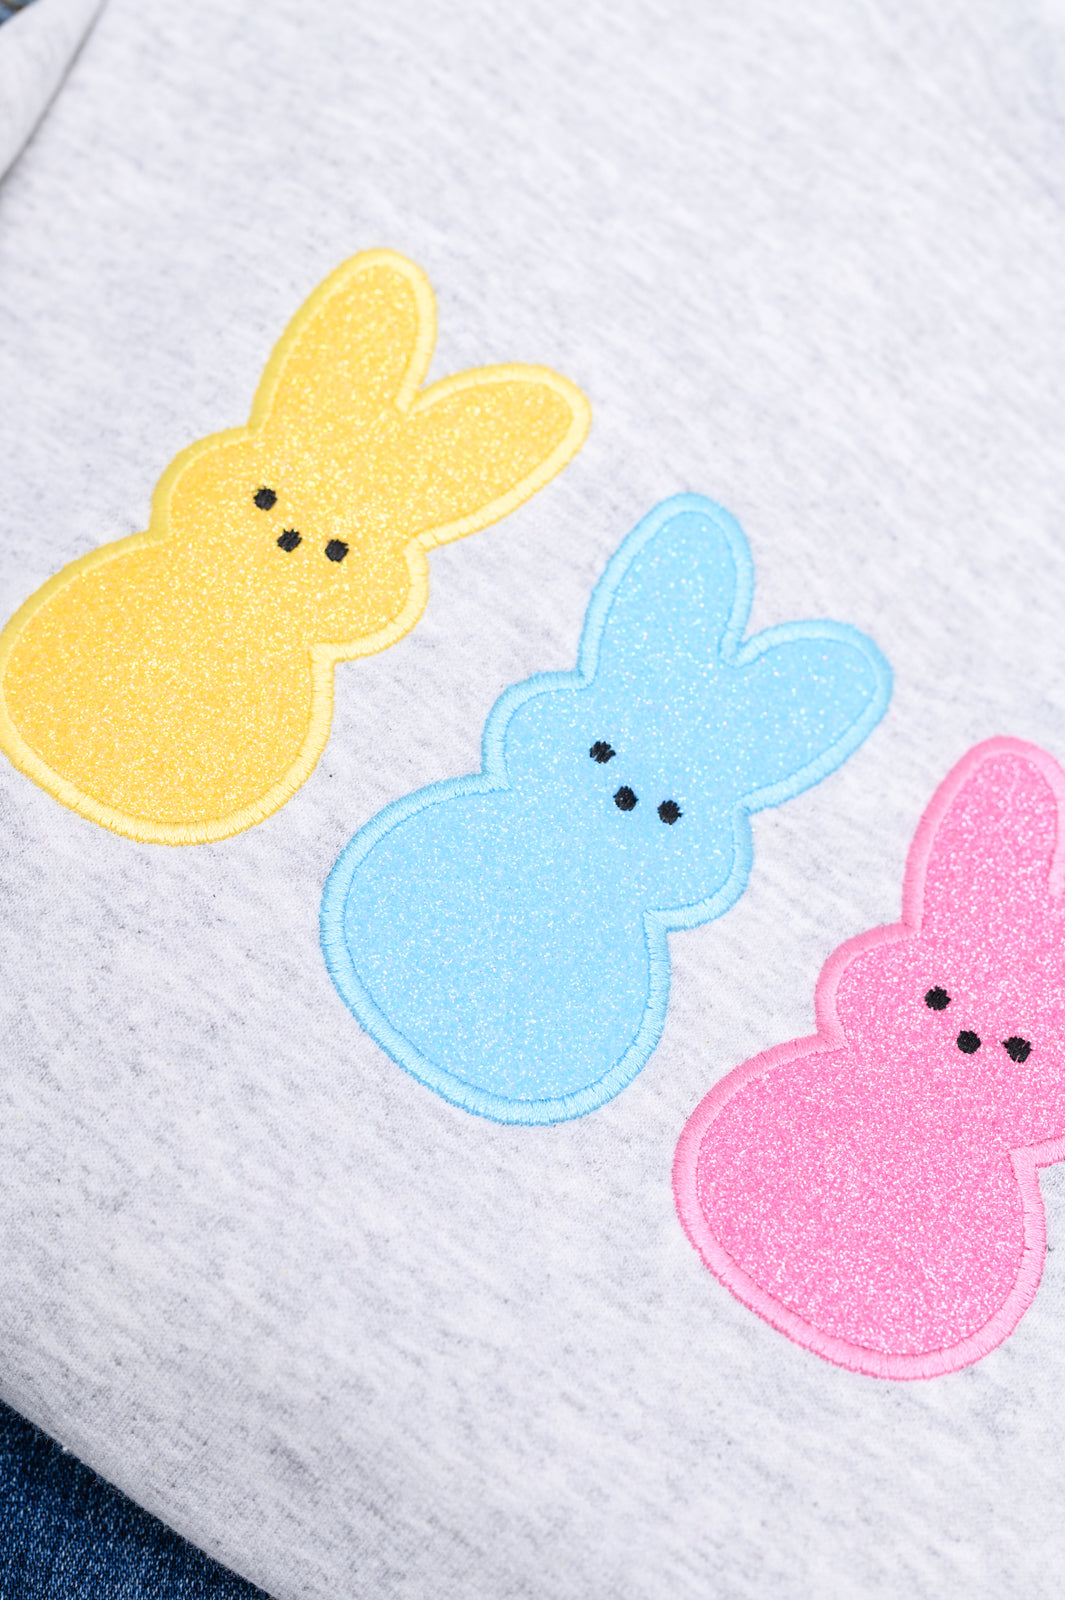 PREORDER: Embroidered Glitter Sweatshirt in Multicolor Bunnies